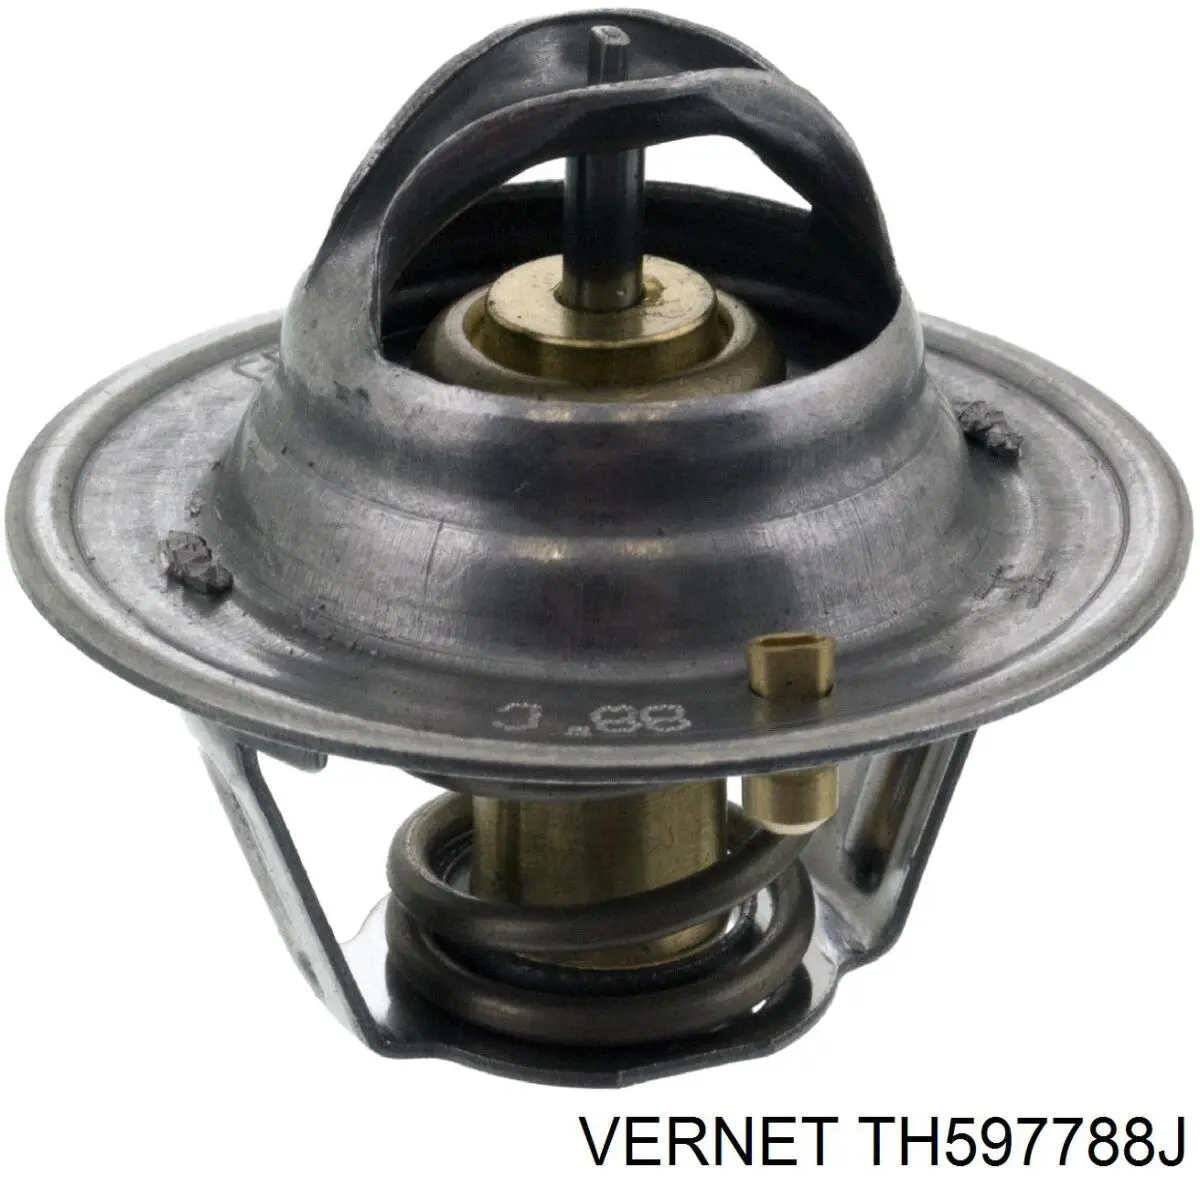 TH5977.88J Vernet termostato